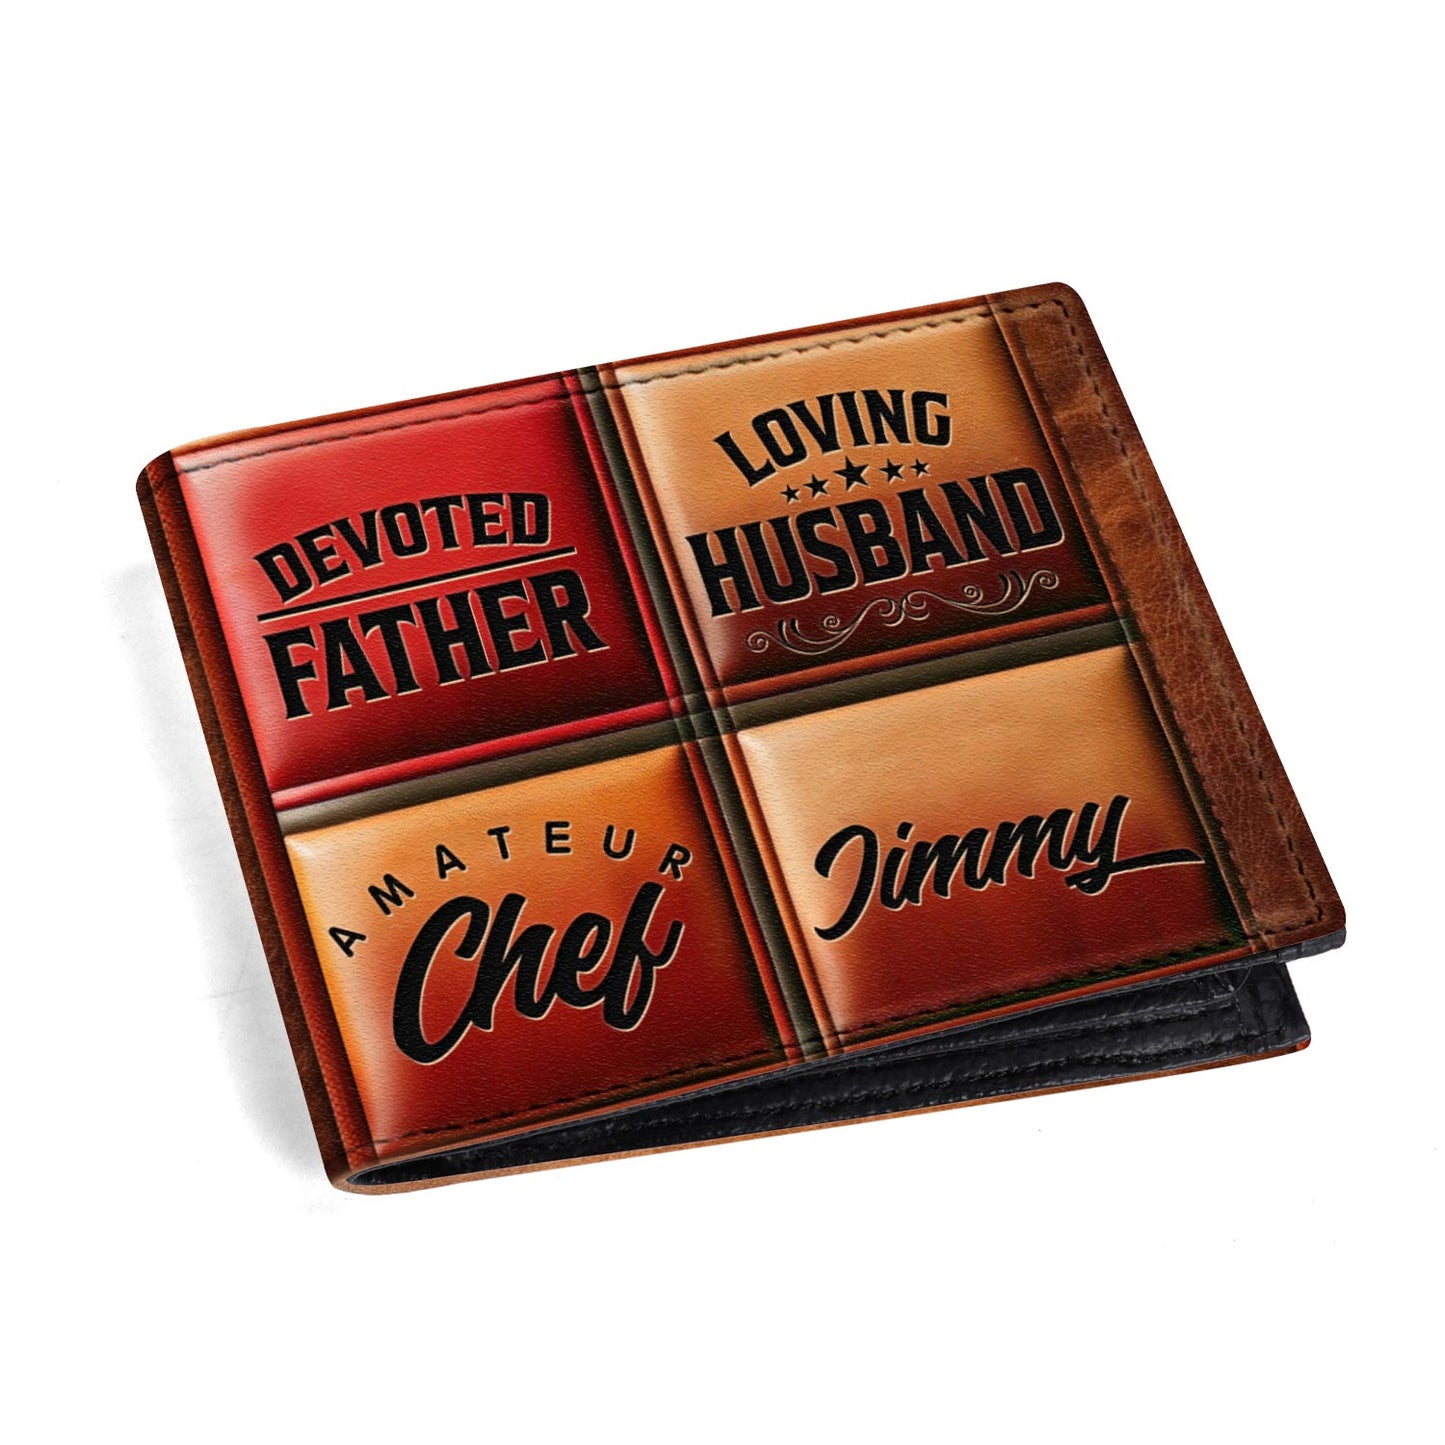 Devoted Husband Amateur Chef  - Men's Leather Wallet - MW07